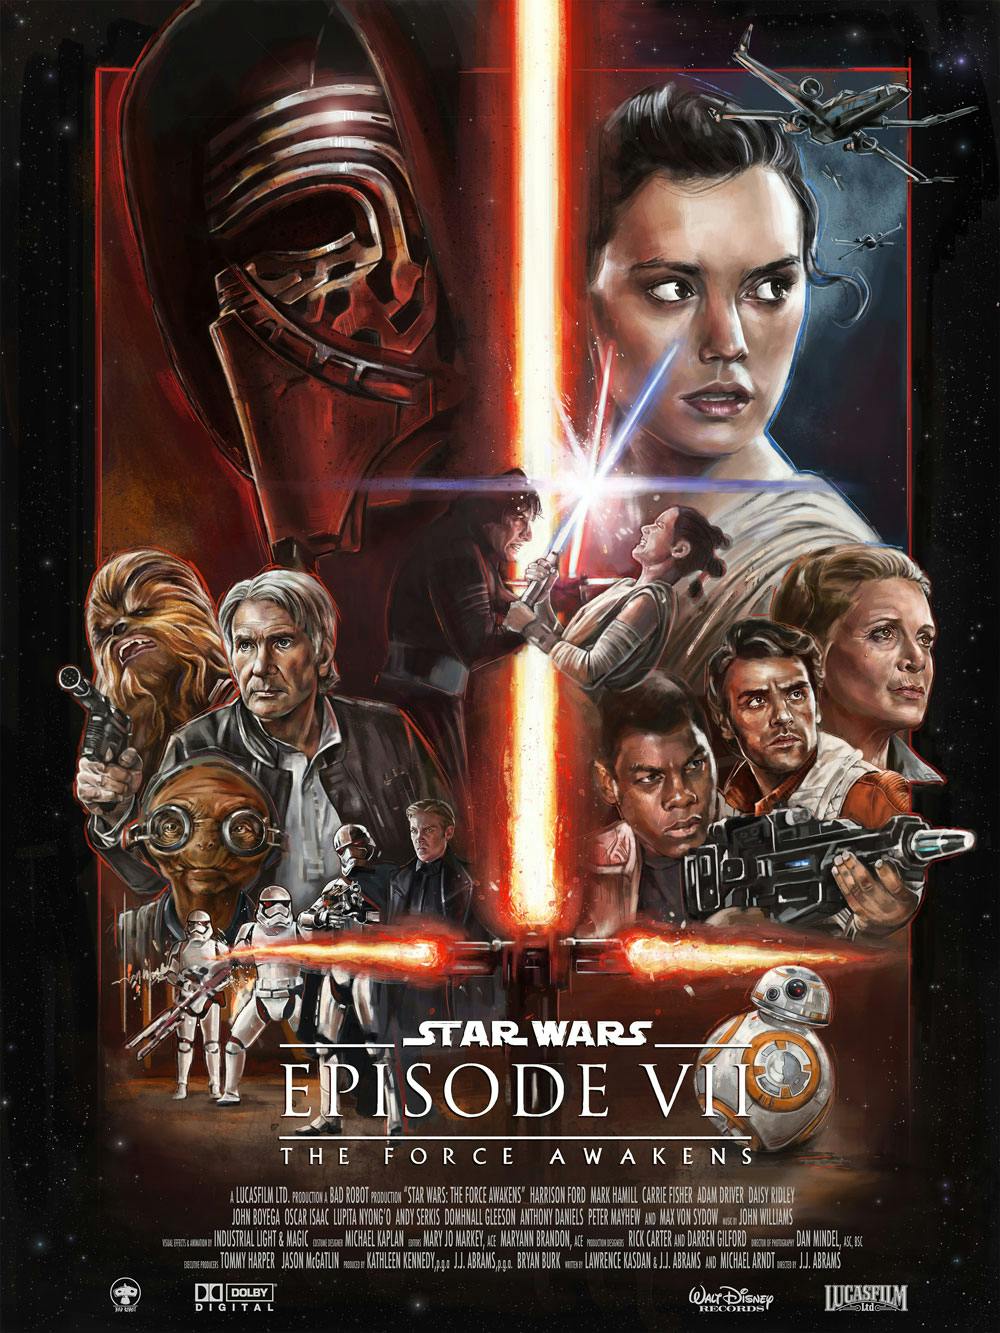 Original poster artwork for "Star Wars: The Force Awakens" by Celebrity Fan Fest guest artist Robert Bruno